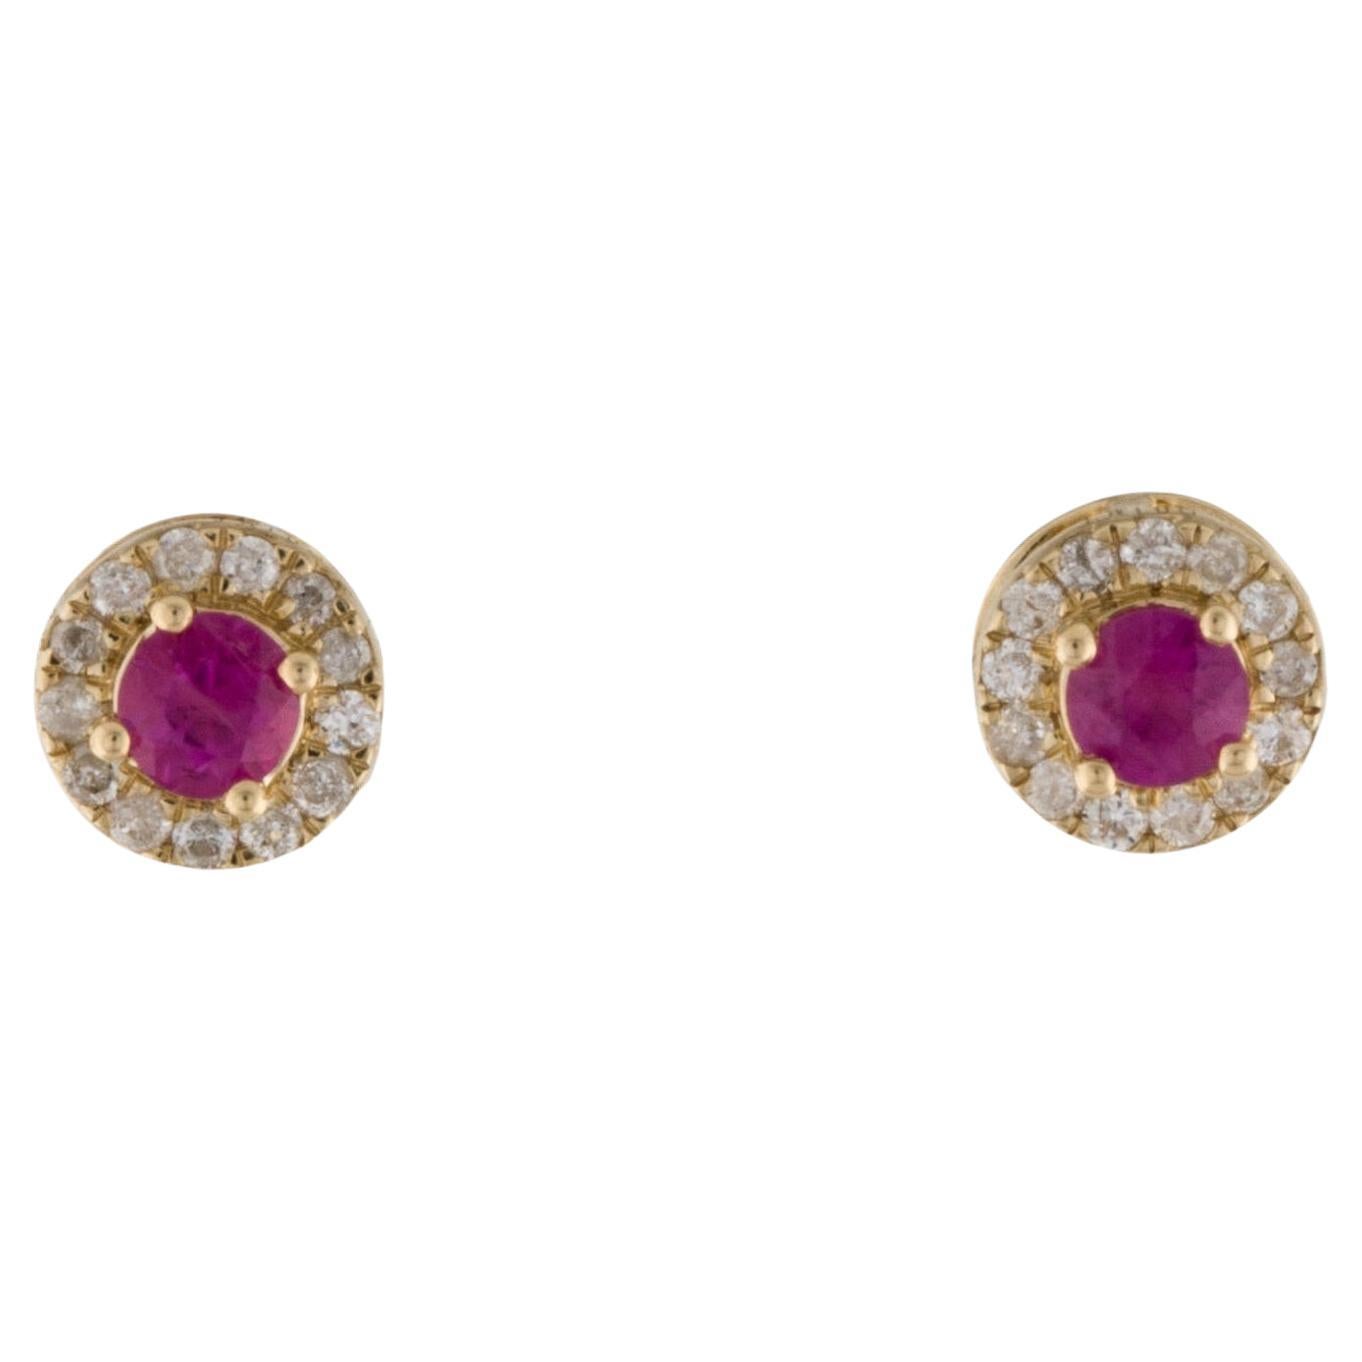 Exquisite 14K Ruby & Diamond Studs - Elegant & Timeless Gemstone Earrings For Sale